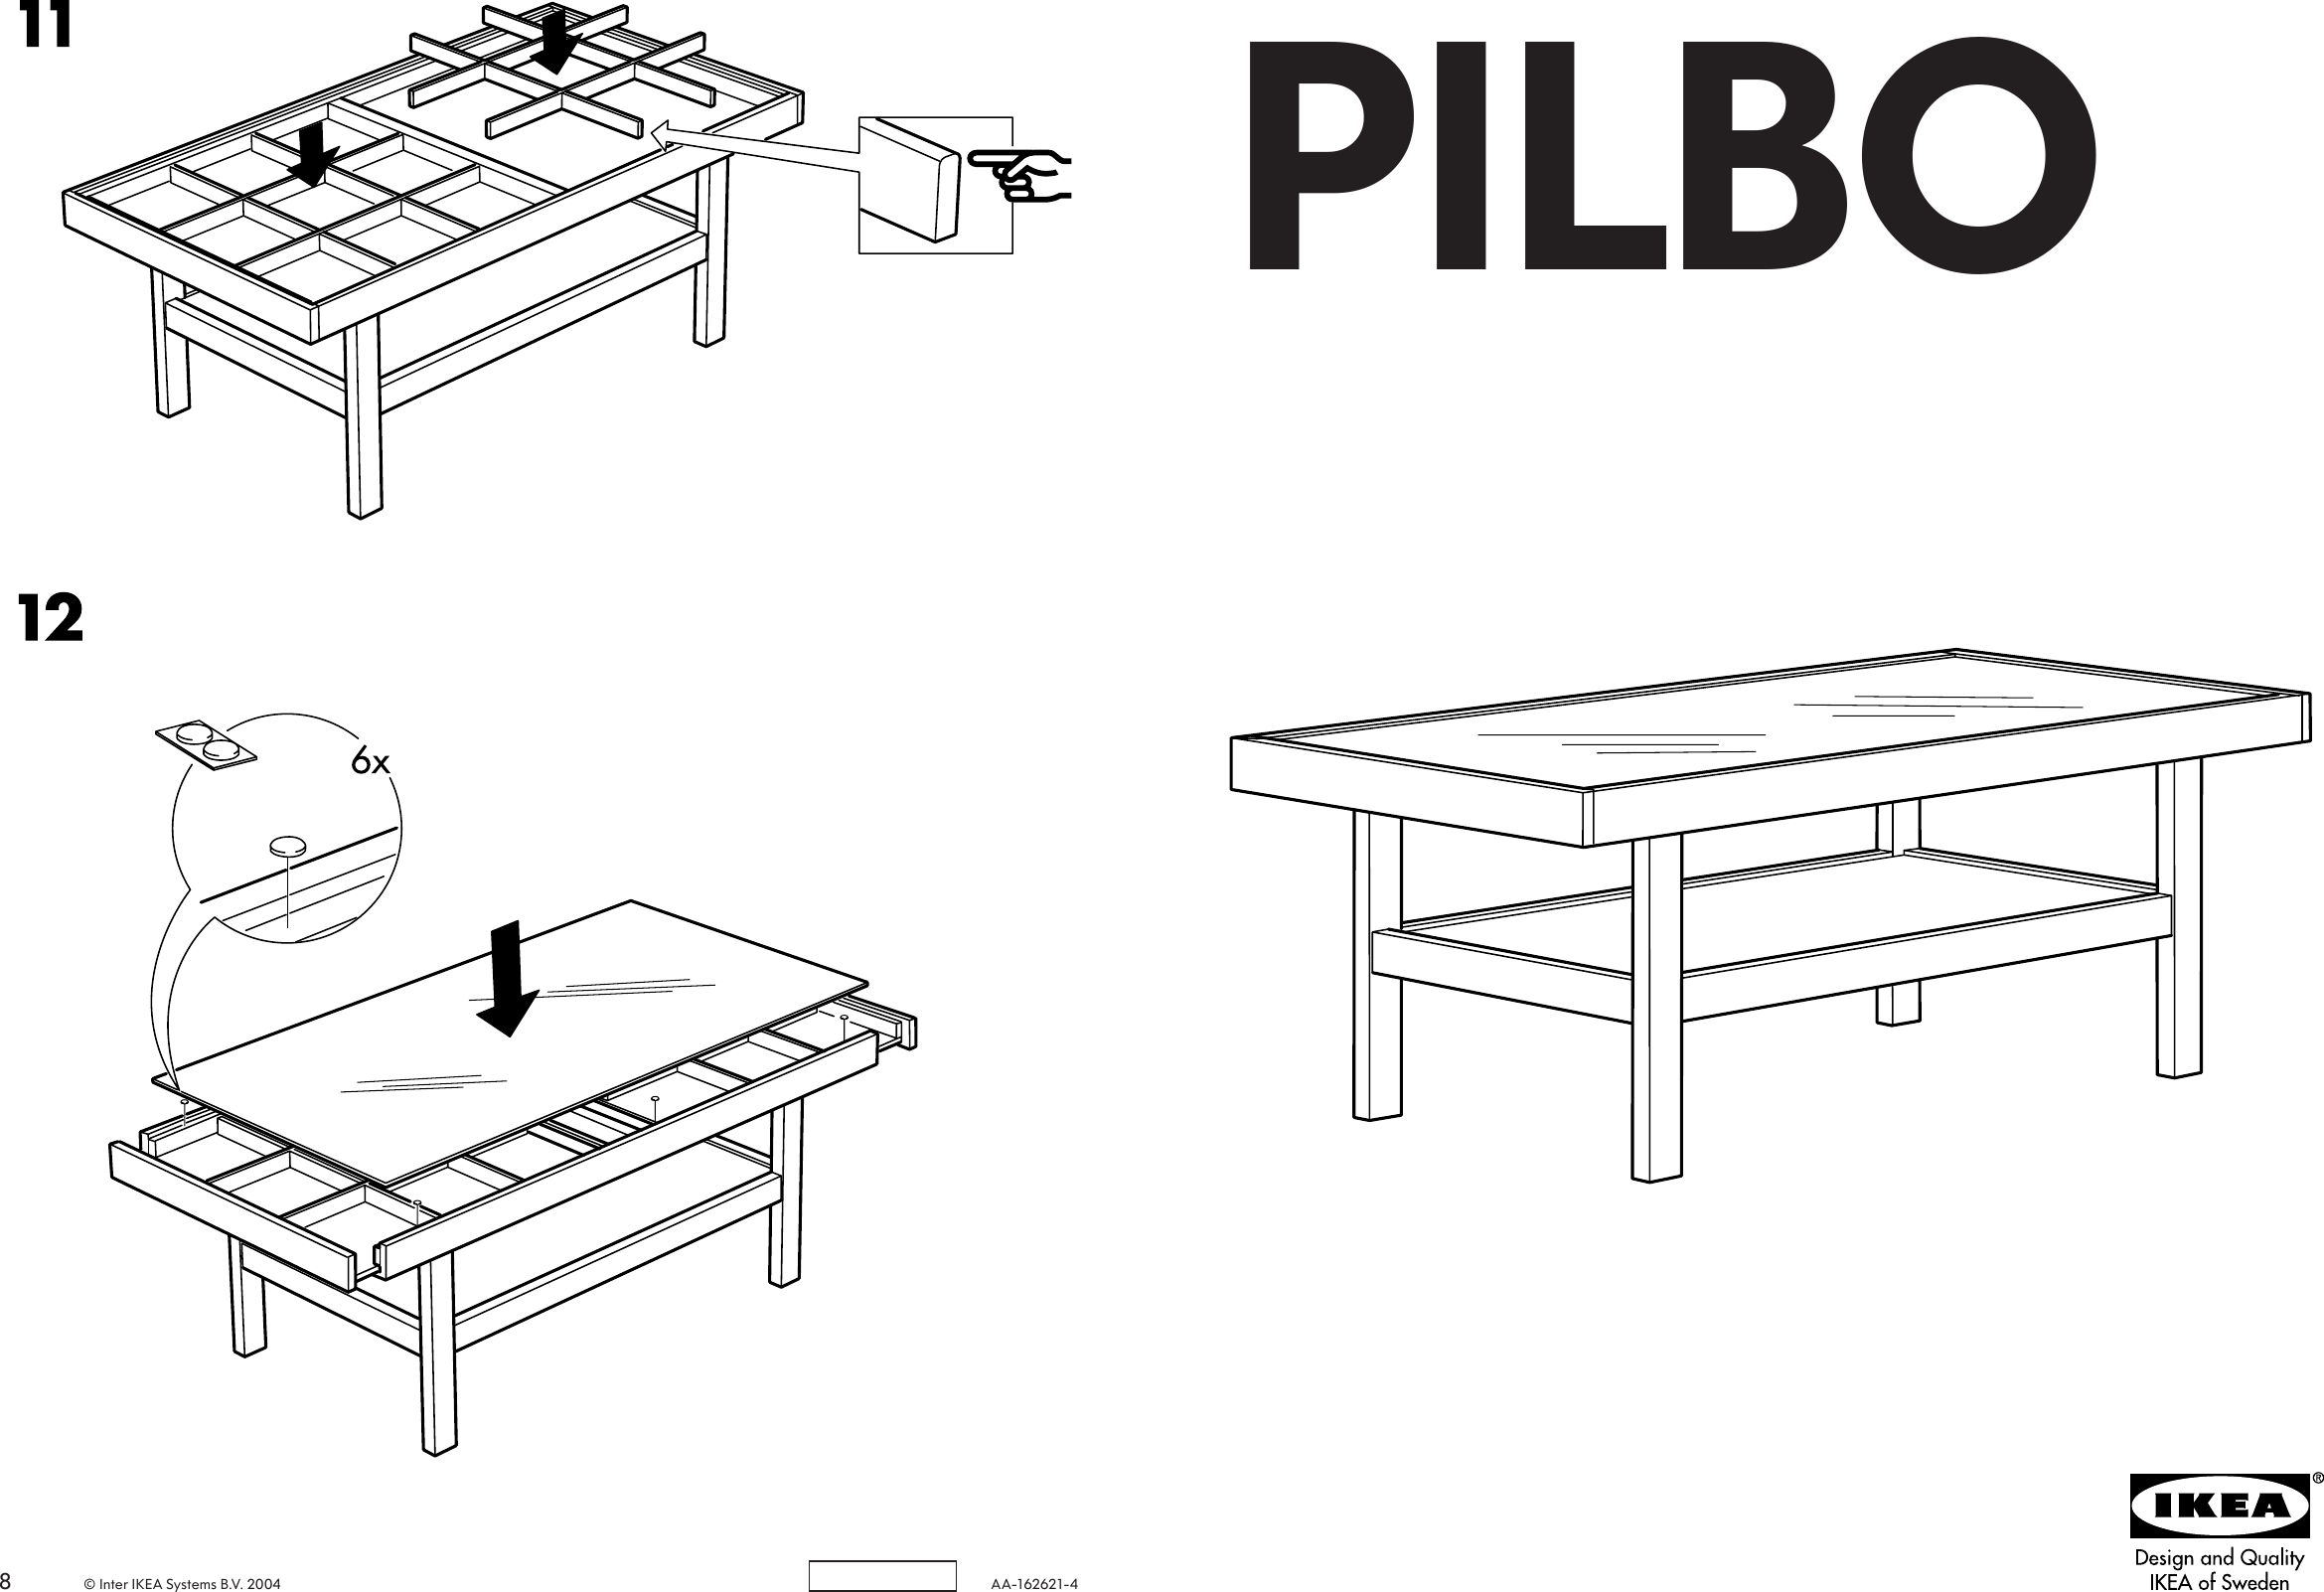 Ikea Pilbo Coffee Table 46 1 2x24 Assembly Instruction